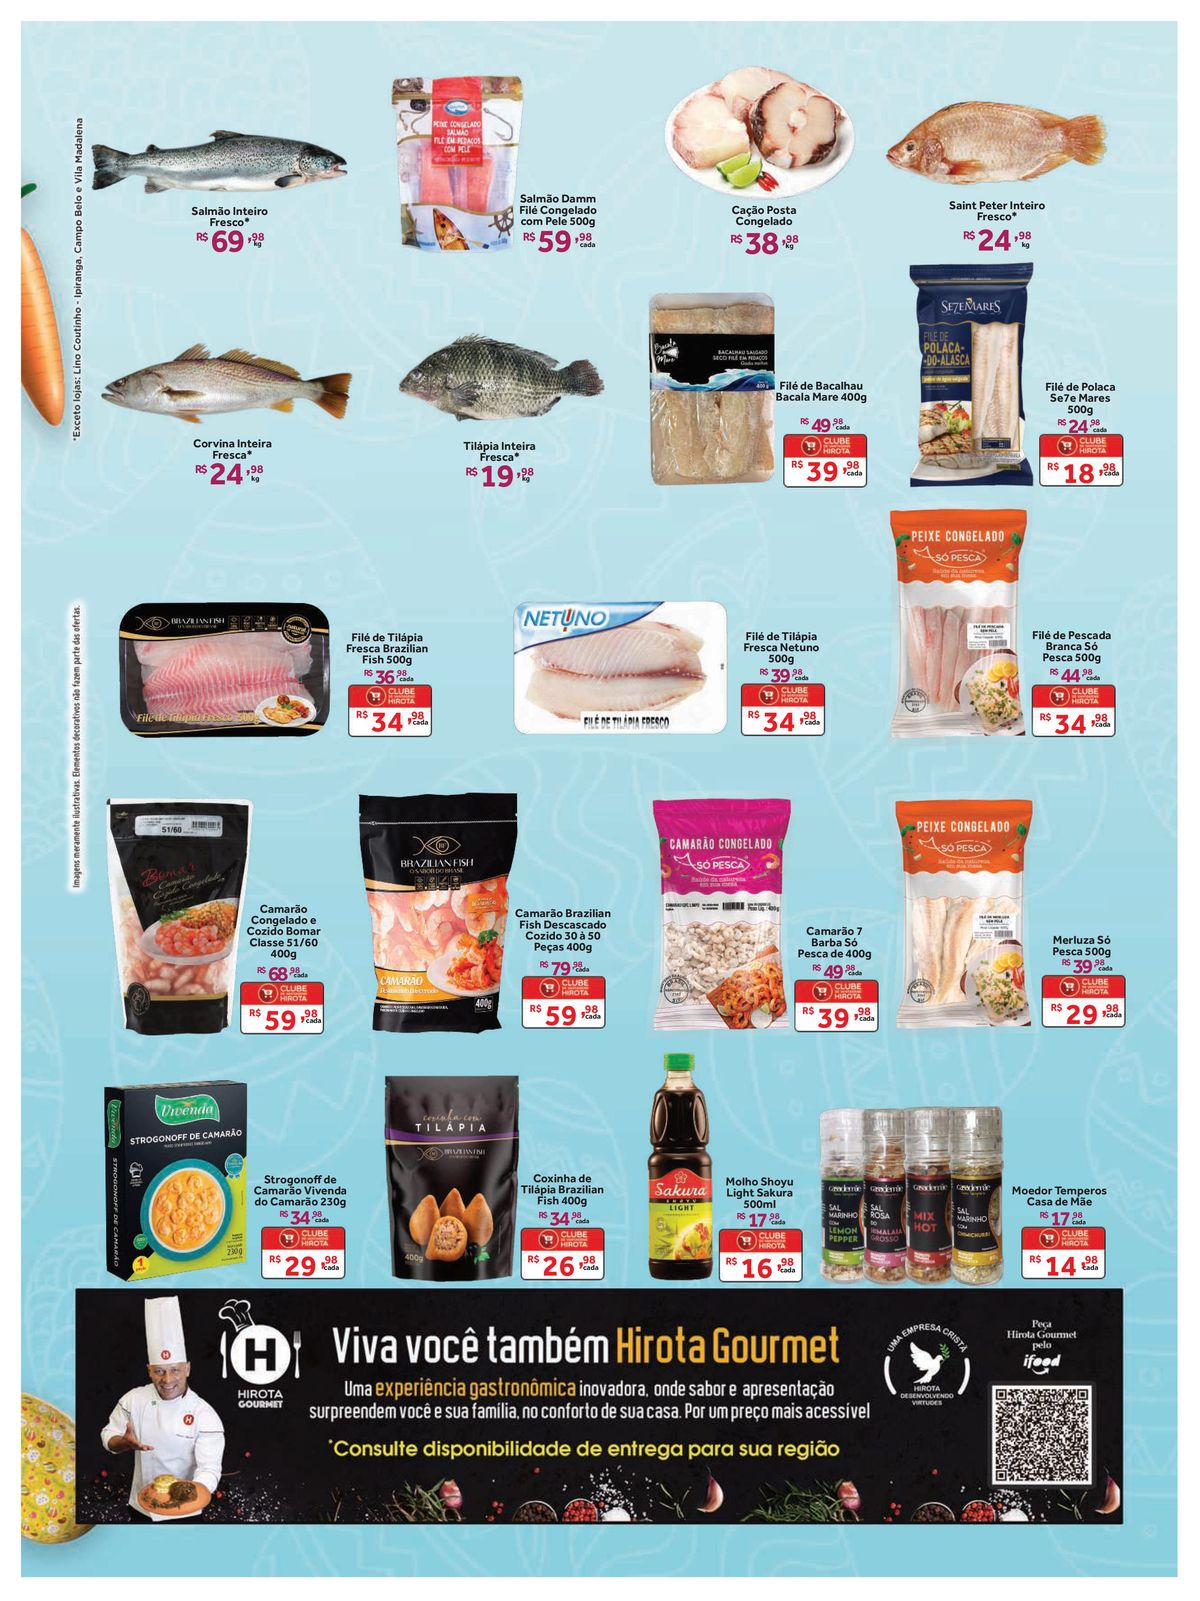 Ofertas de Peixes e Frutos do Mar no Hirota Food Supermercado